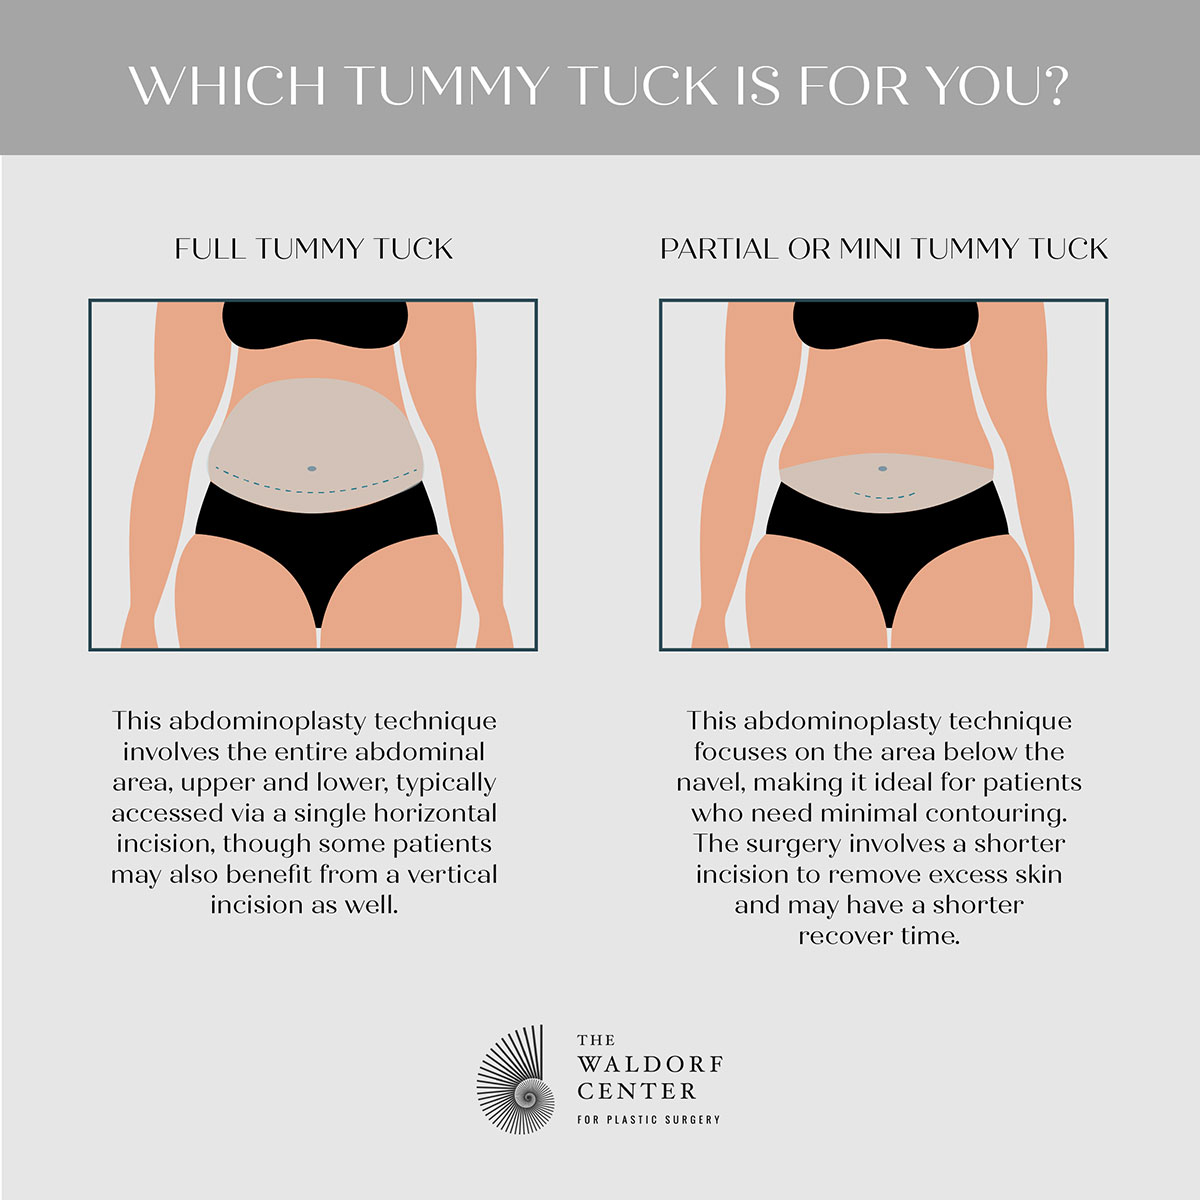 Fleur-De-Lis Abdominoplasty: Tighten and Contour Your Tummy